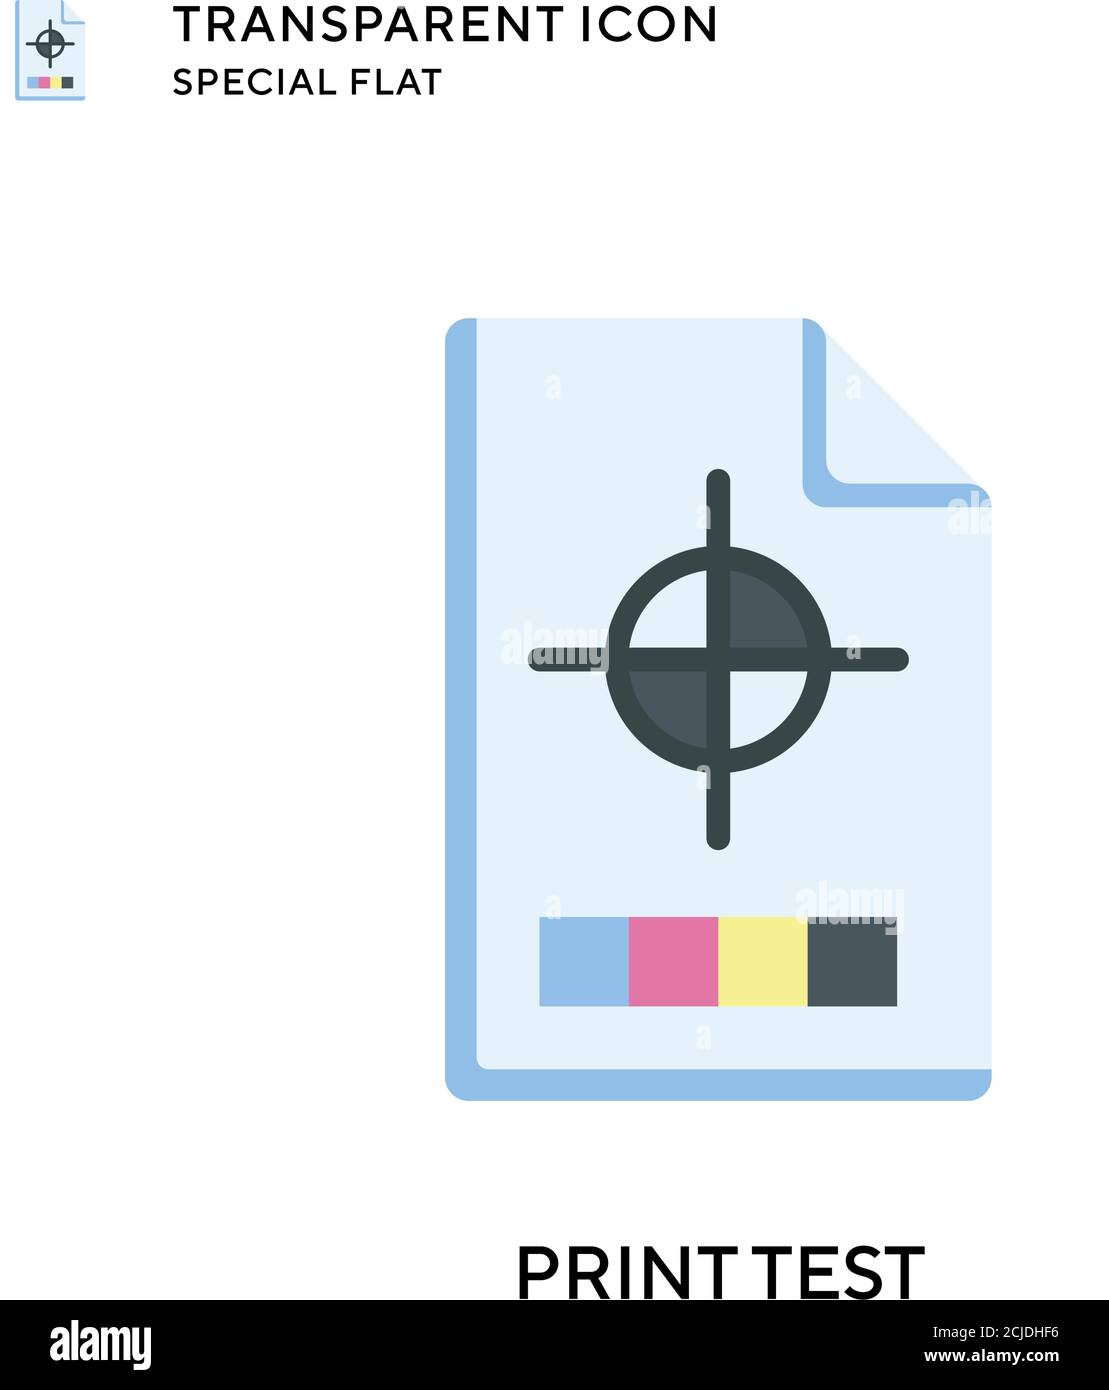 Print test vector icon. Flat style illustration. EPS 10 vector. Stock Vector